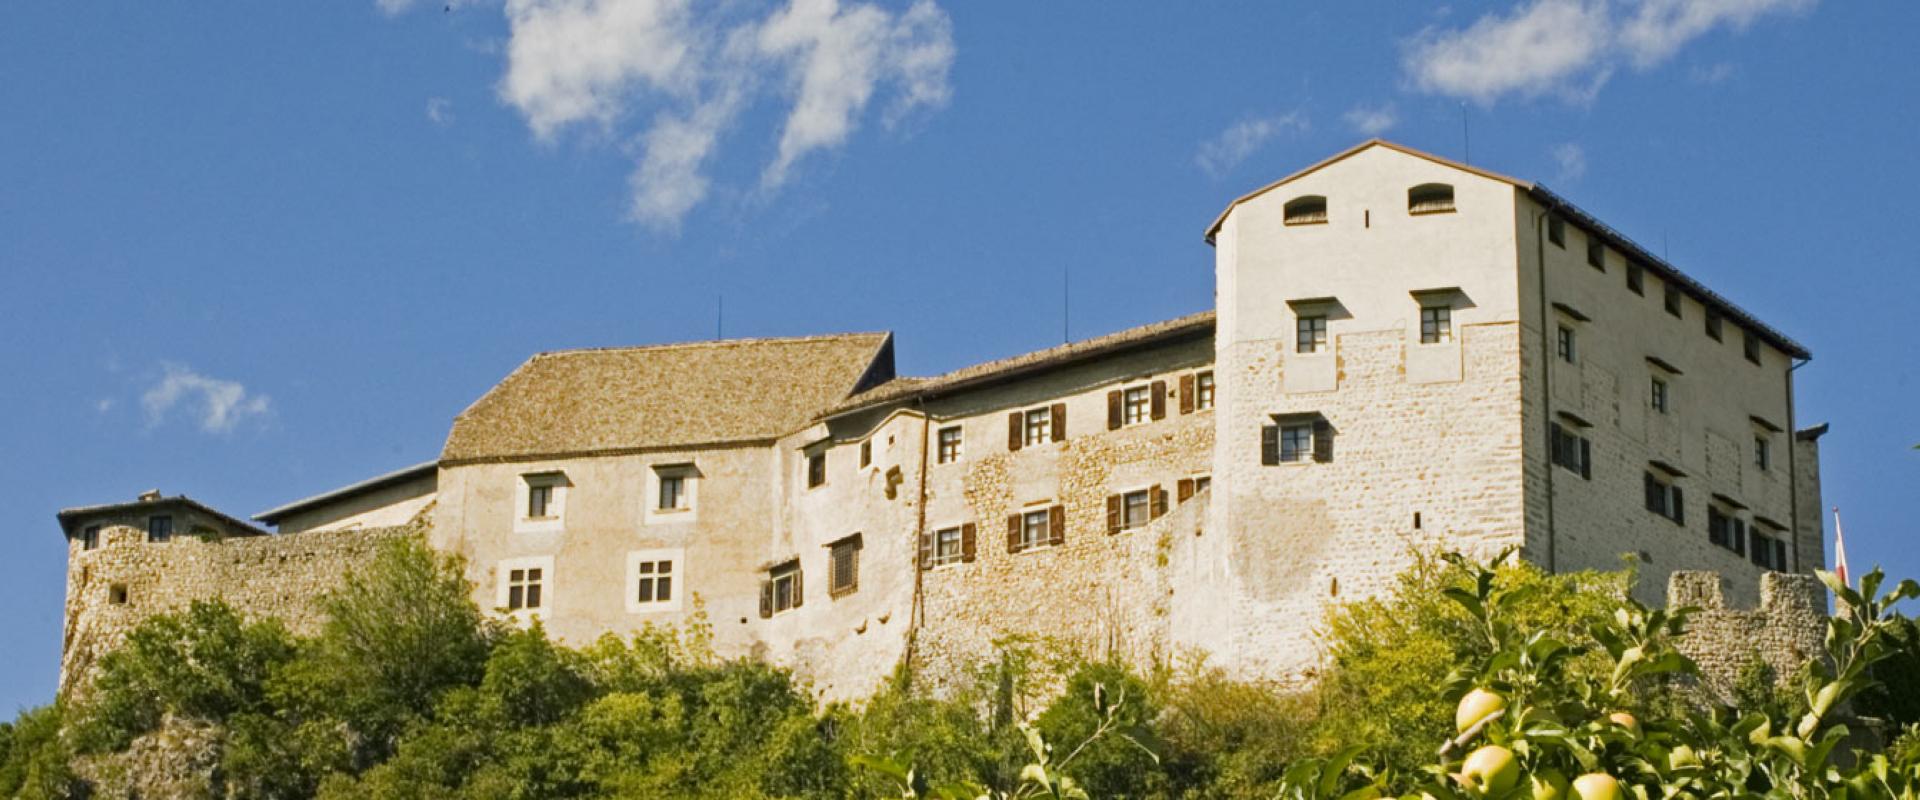 Visit of Stenico castle